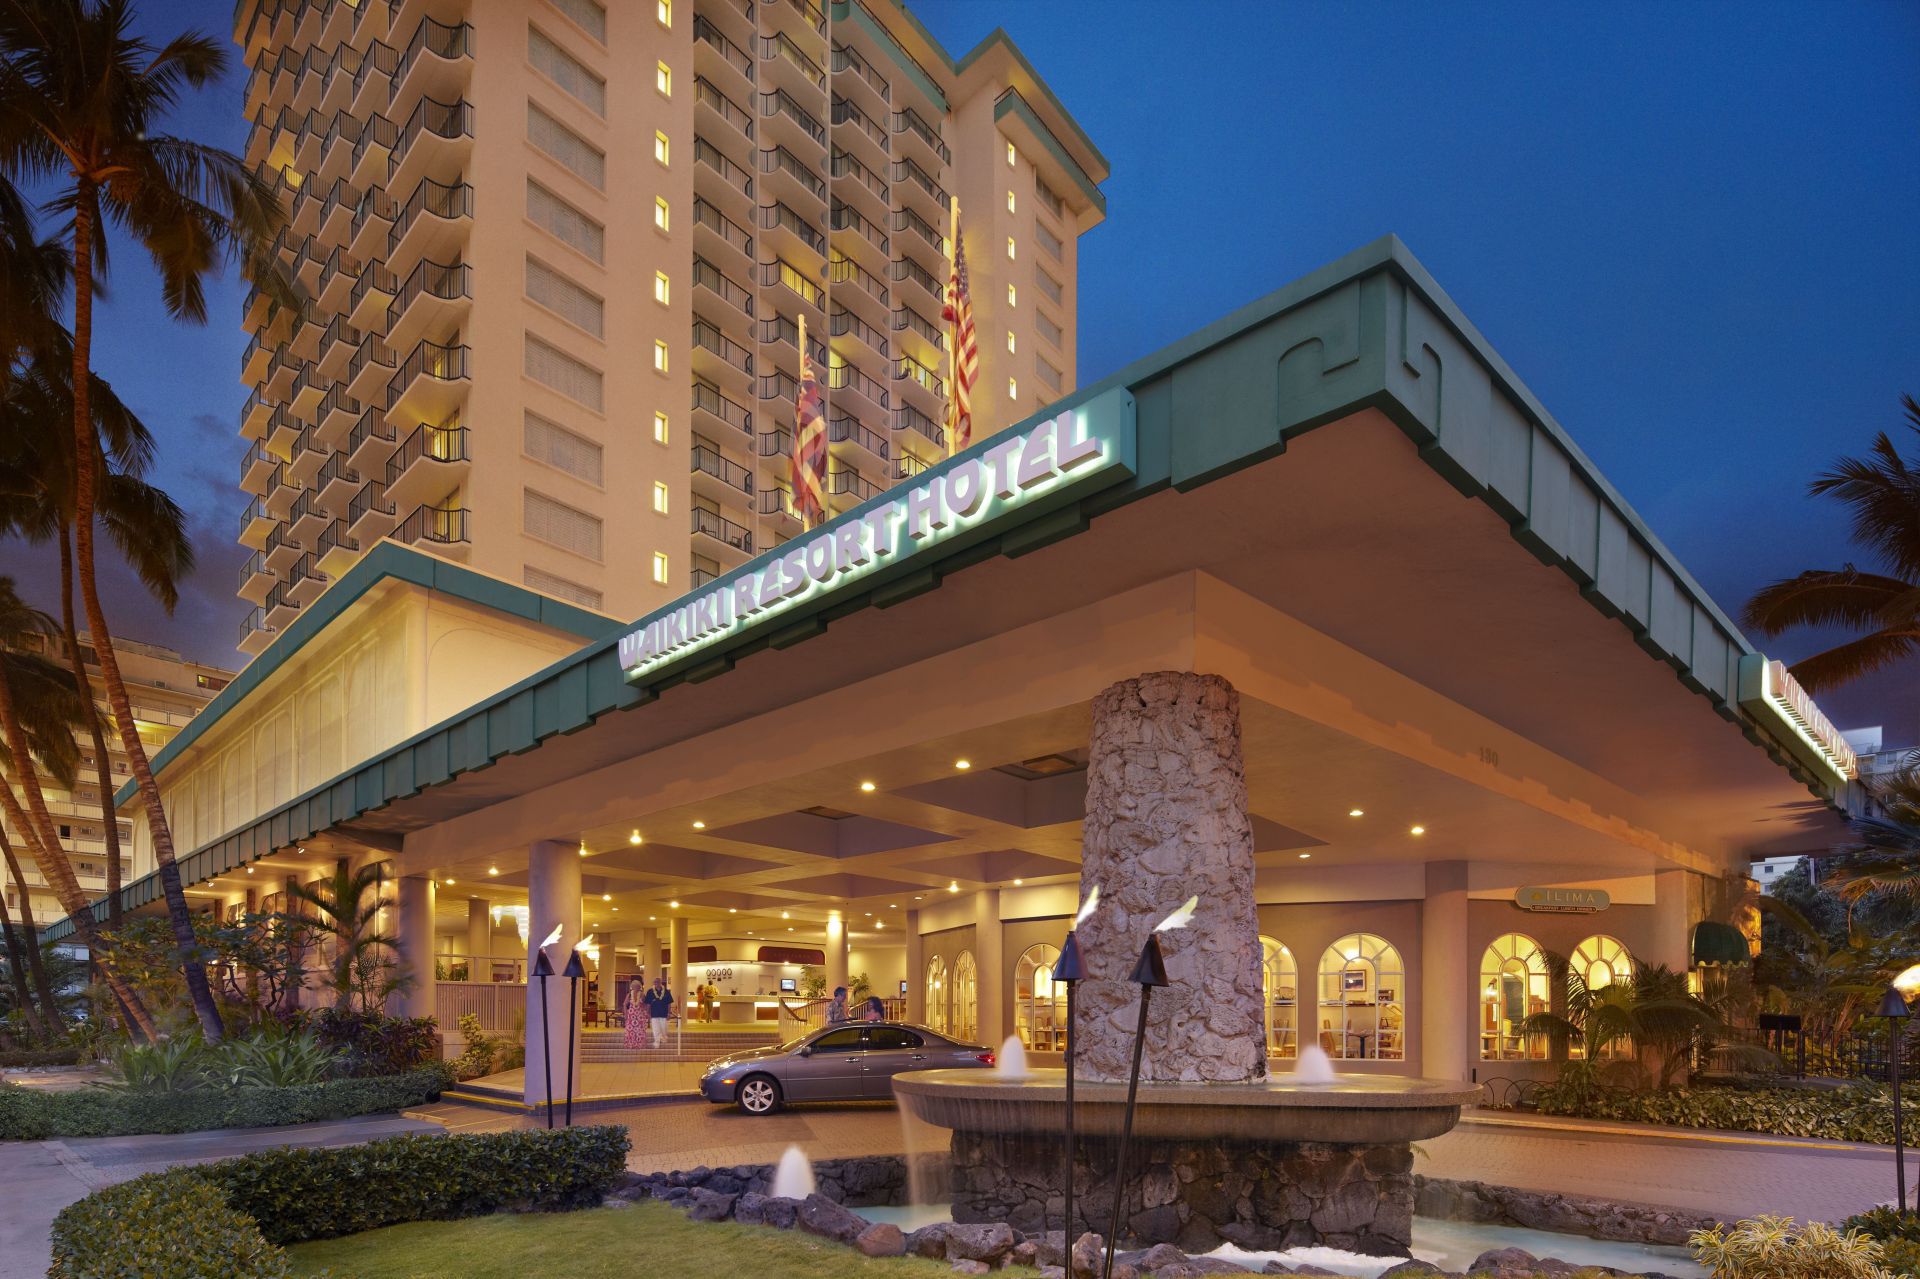 Photo of Waikiki Resort Hotel, Honolulu, HI